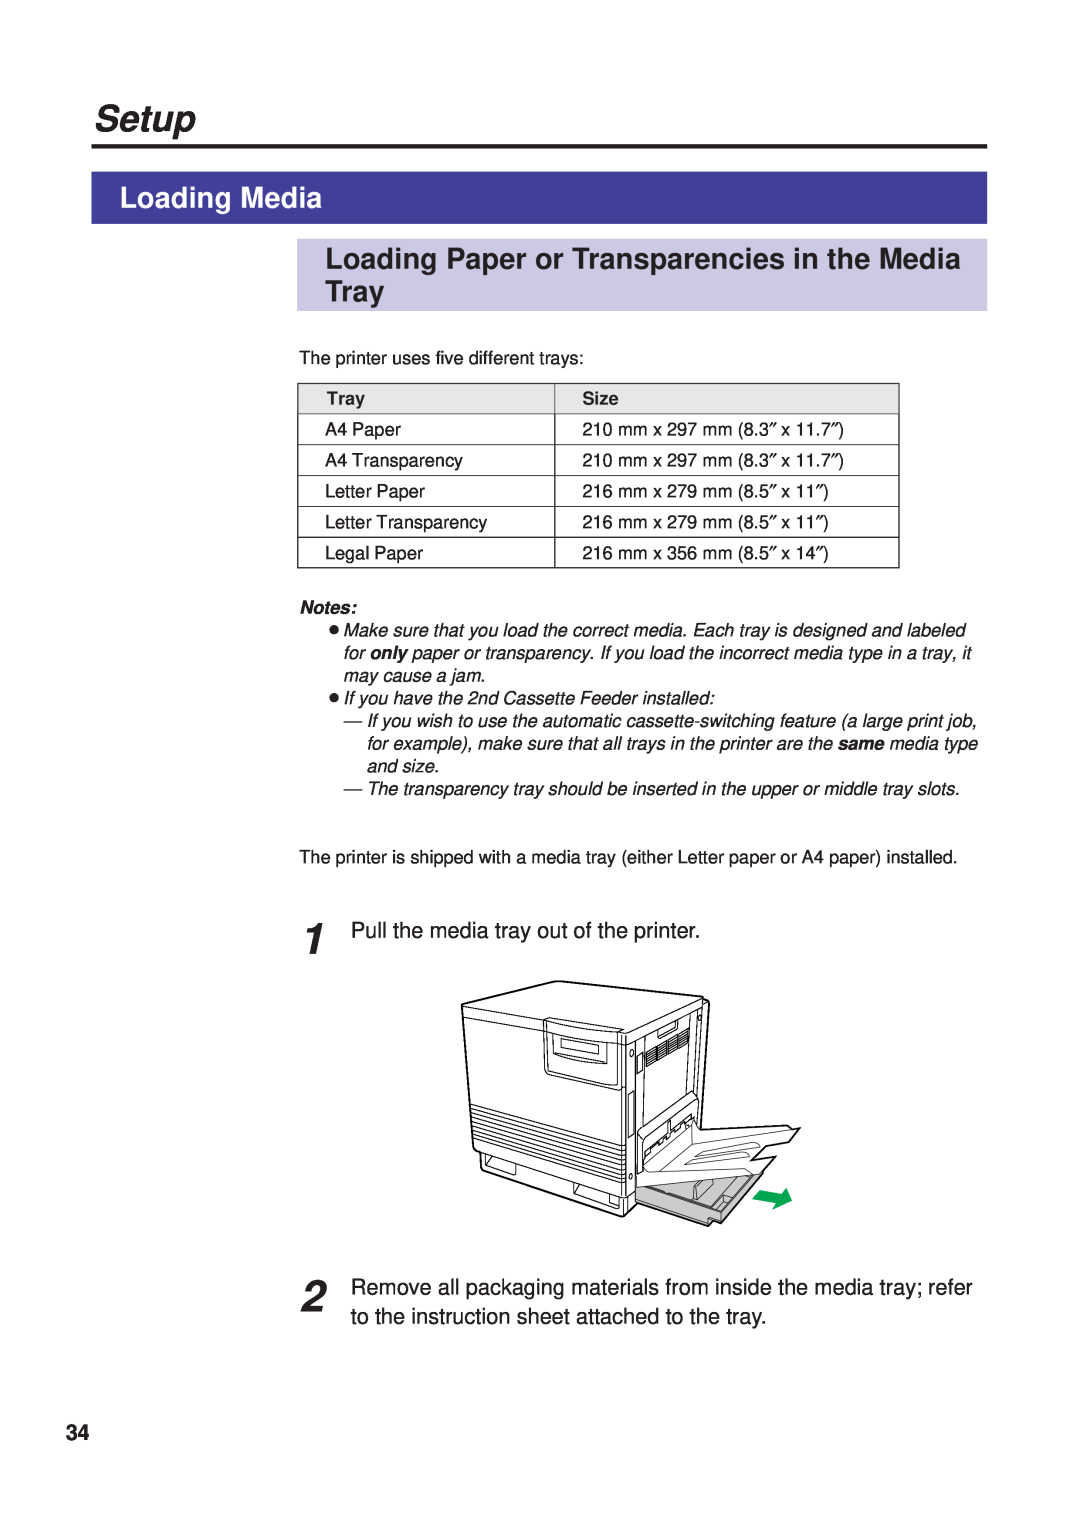 Panasonic KX-PS8000 manual Loading Media, Loading Paper or Transparencies in the Media Tray, Setup, Size 